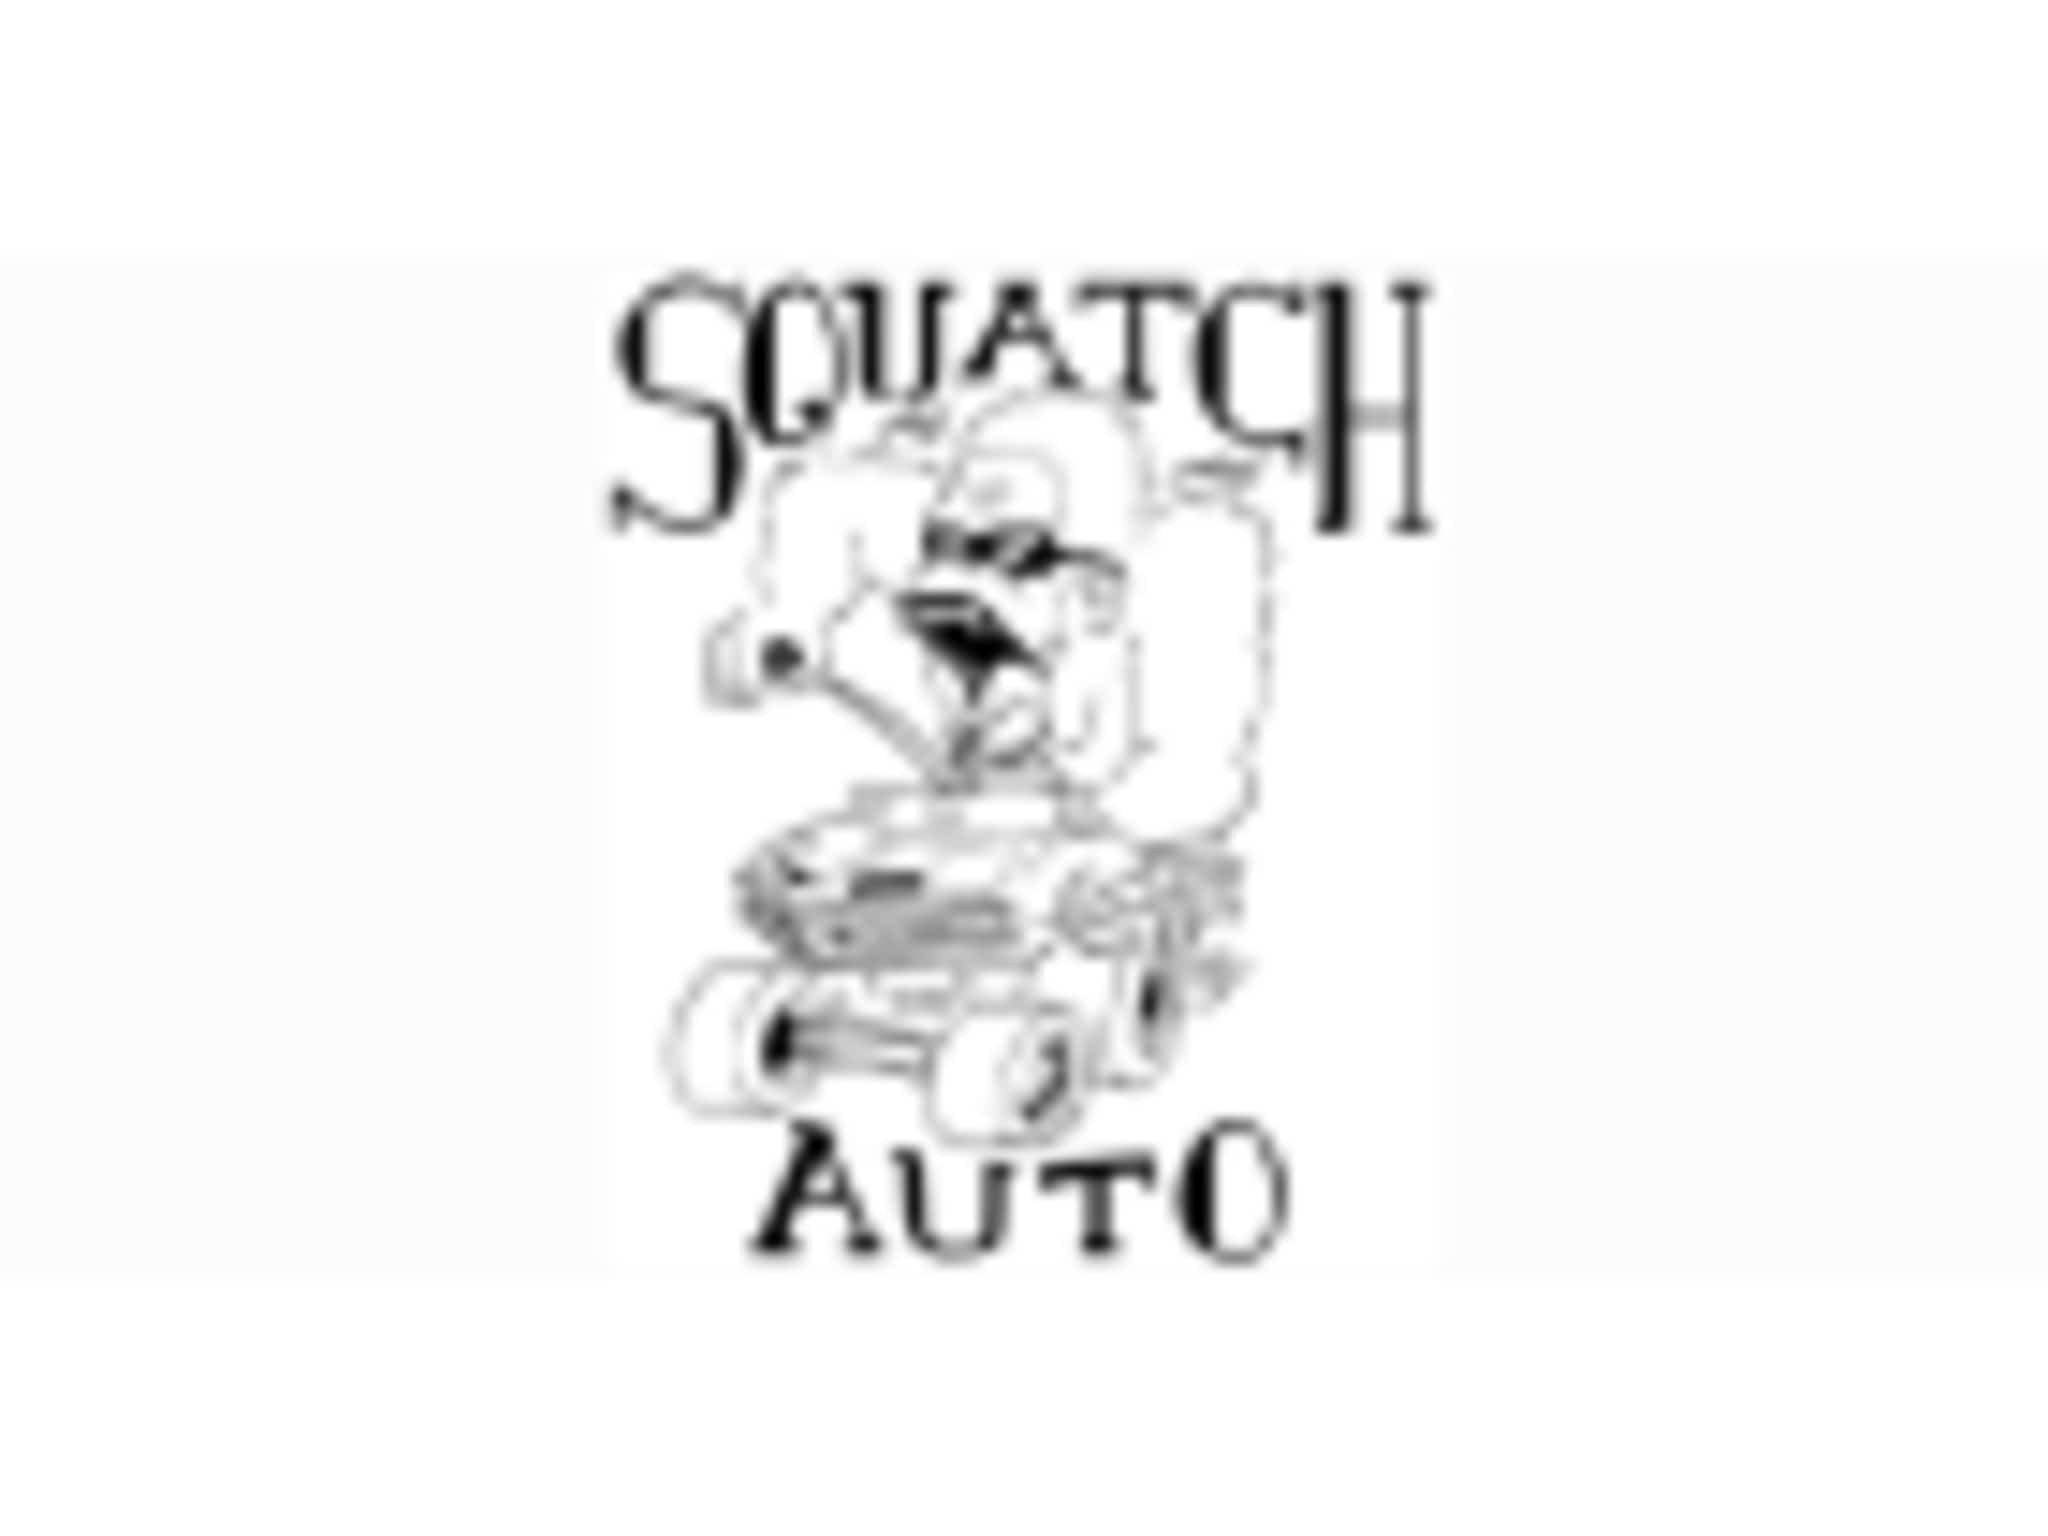 photo Squatch Auto